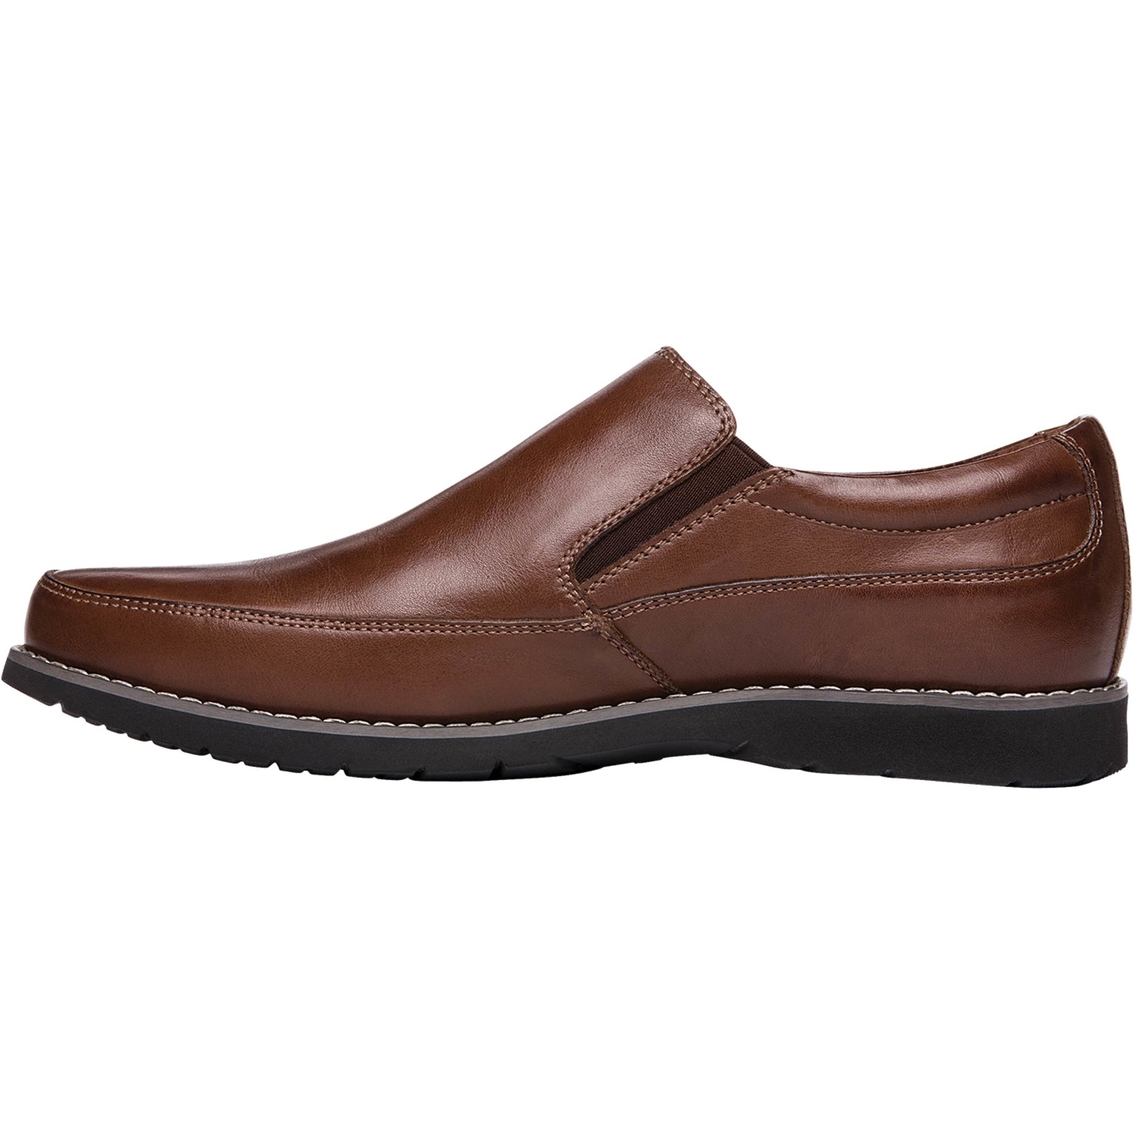 Propet Grant Dress Slip On Shoes - Image 3 of 6